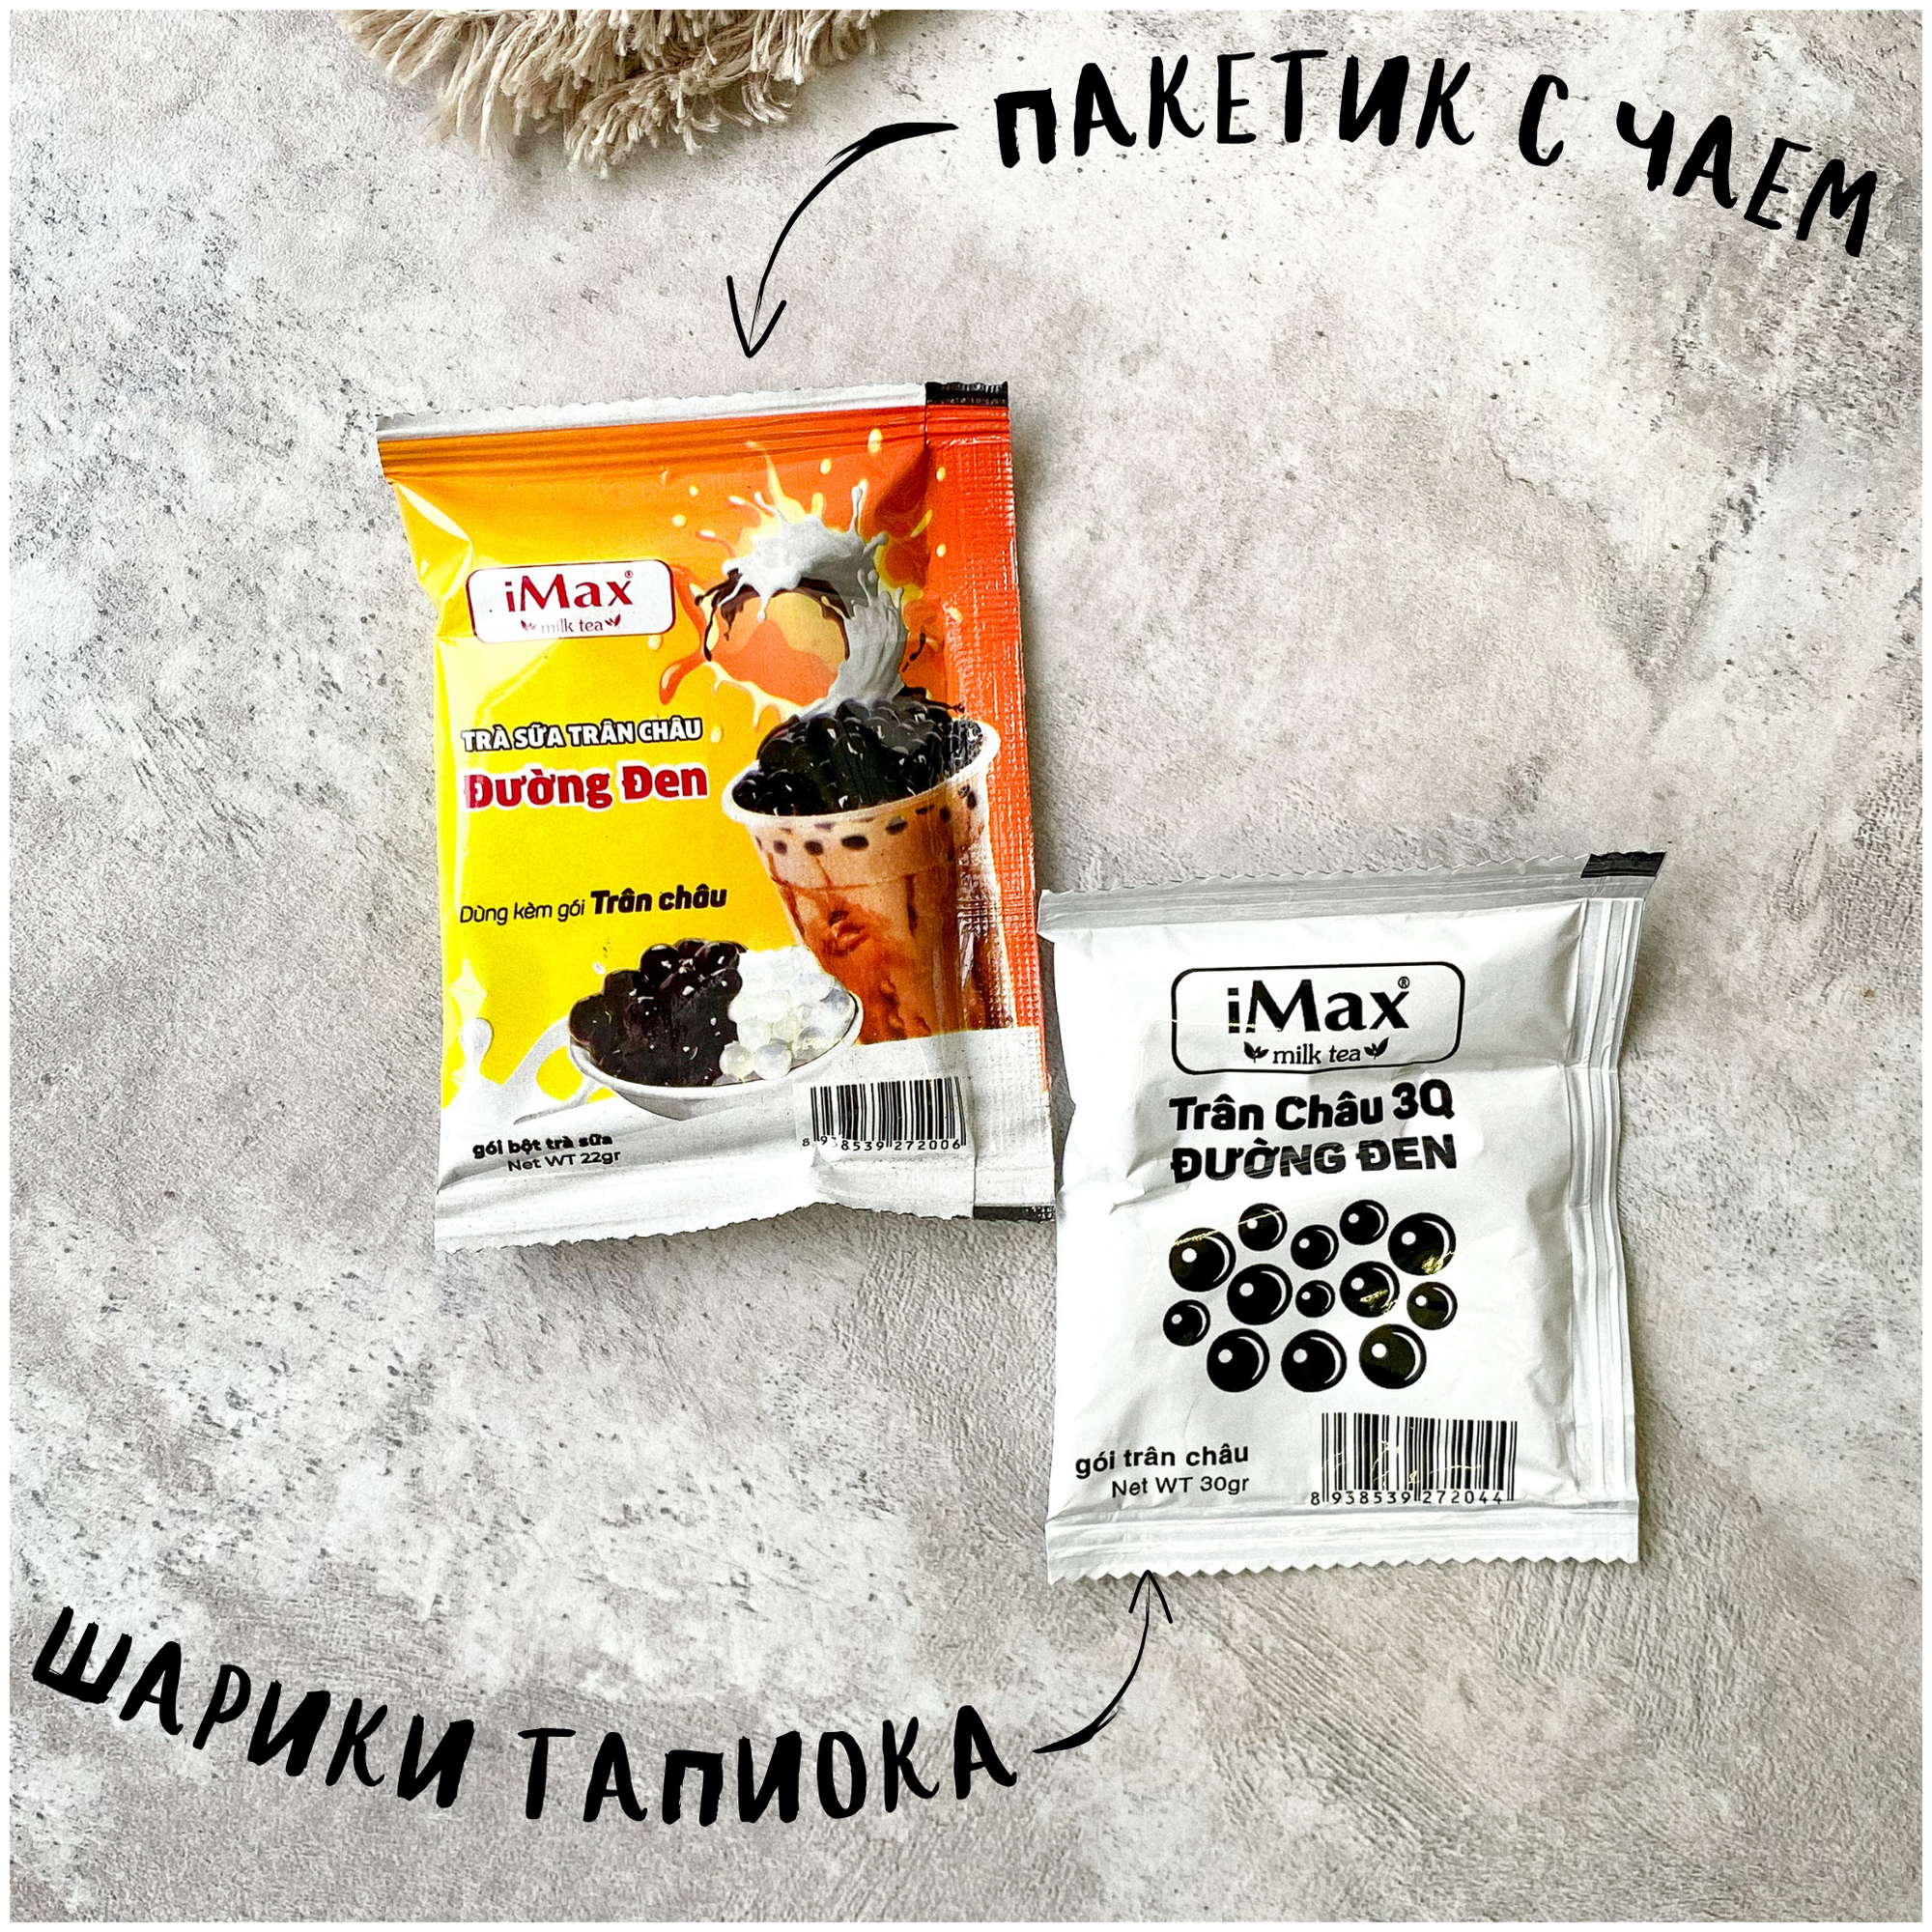 Вьетнамский Бабл Ти Bubble Tea со вкусом черного сахара iMax, 8 порций, 416 г - фотография № 2